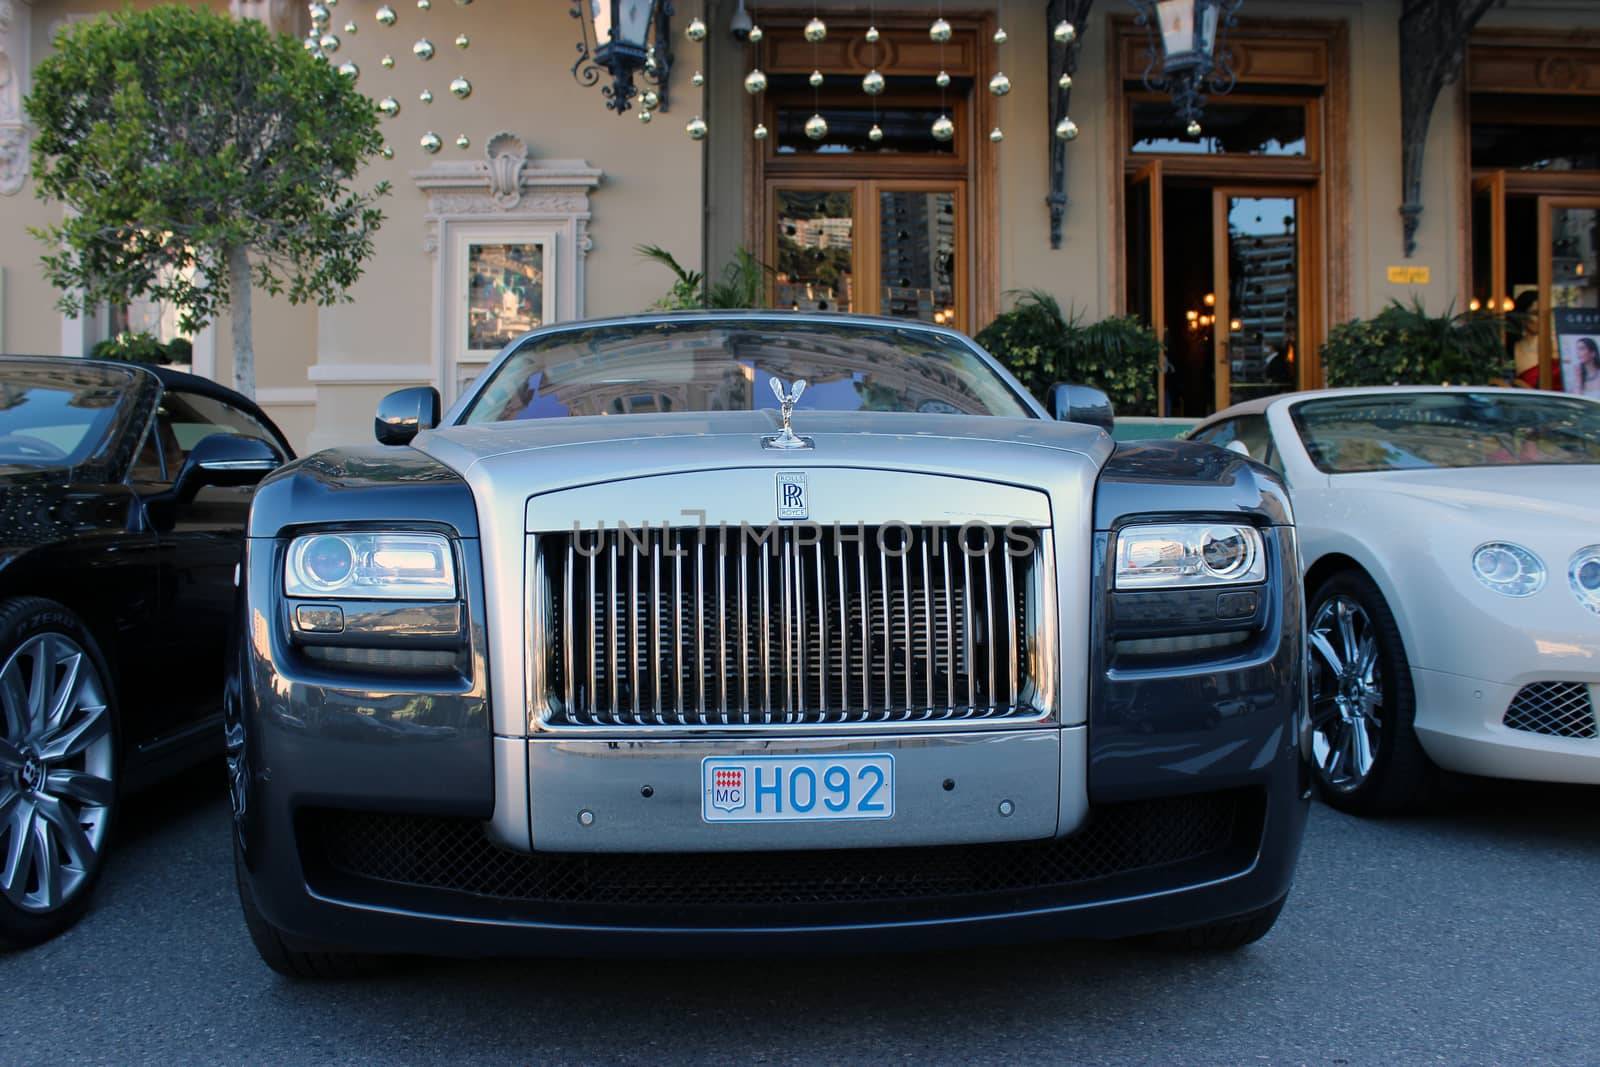 Monte-Carlo, Monaco - January 12 2016: Luxury Car Rolls Royce Phantom Parked in Front of the Monte-Carlo Casino in Monaco